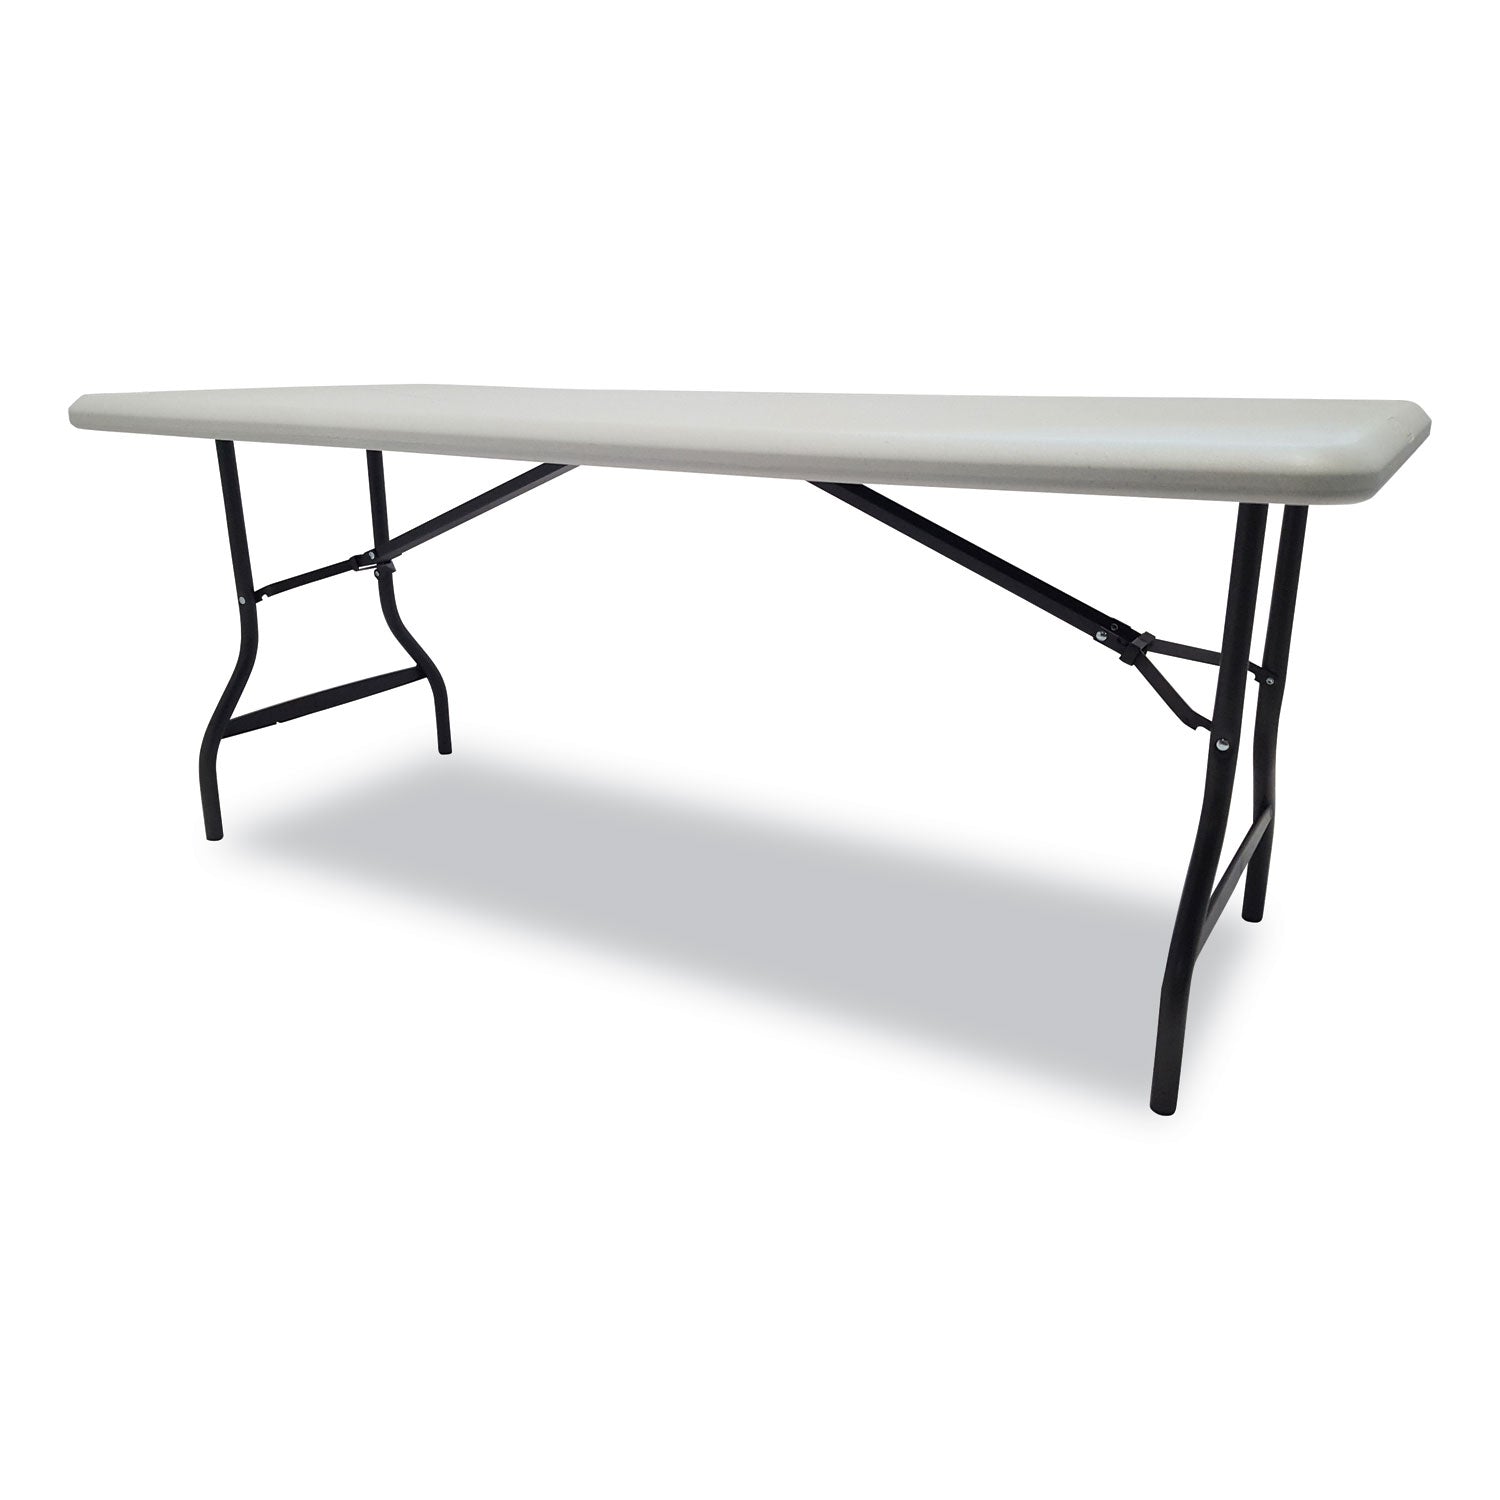 IndestrucTable Industrial Folding Table, Rectangular, 72" x 30" x 29", Platinum - 